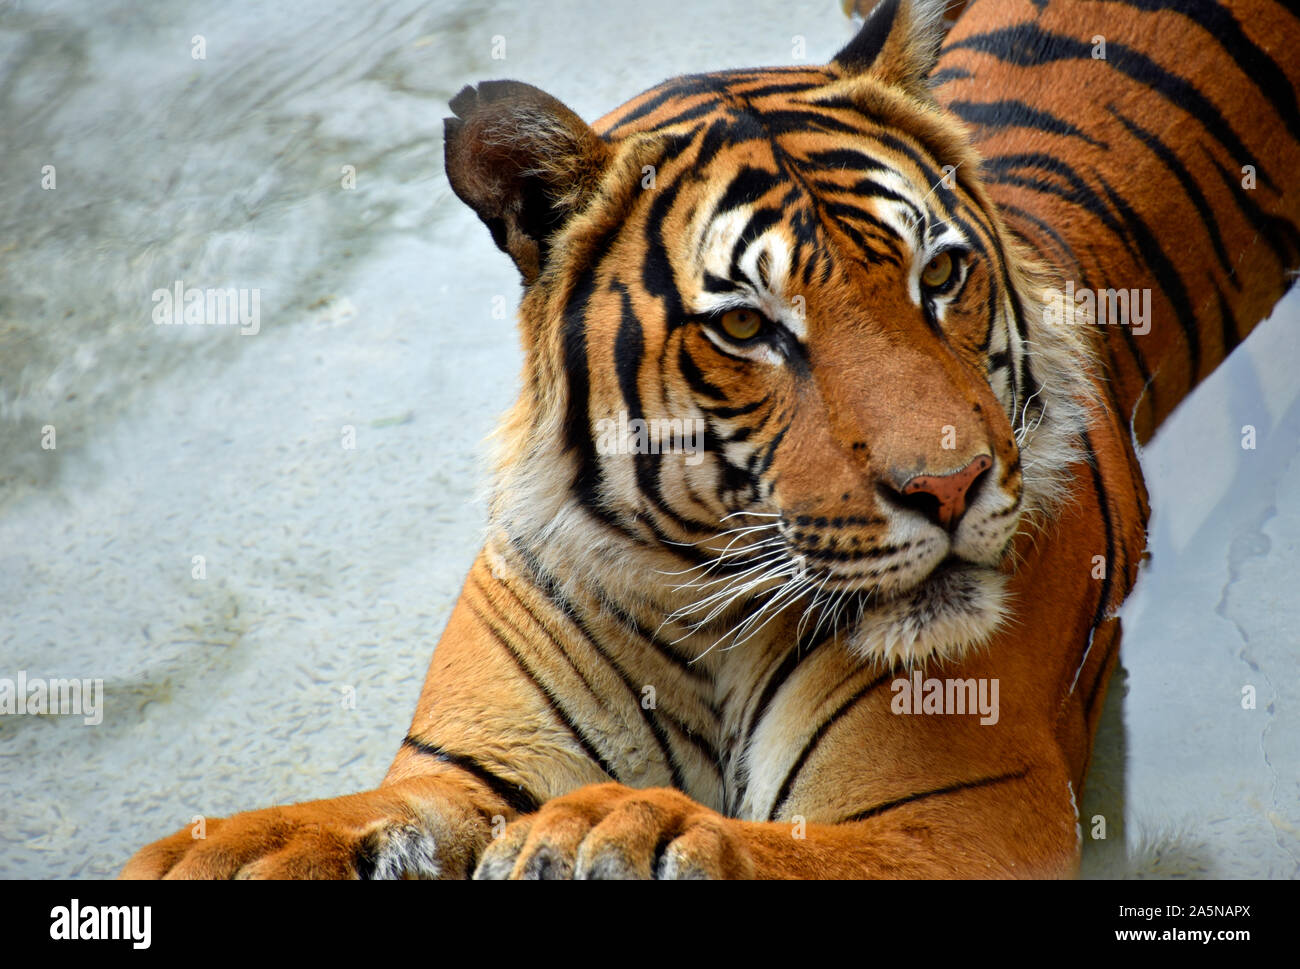 Penari, the Malayan Tiger at the Rio Grande Zoo in New Mexico. Stock Photo